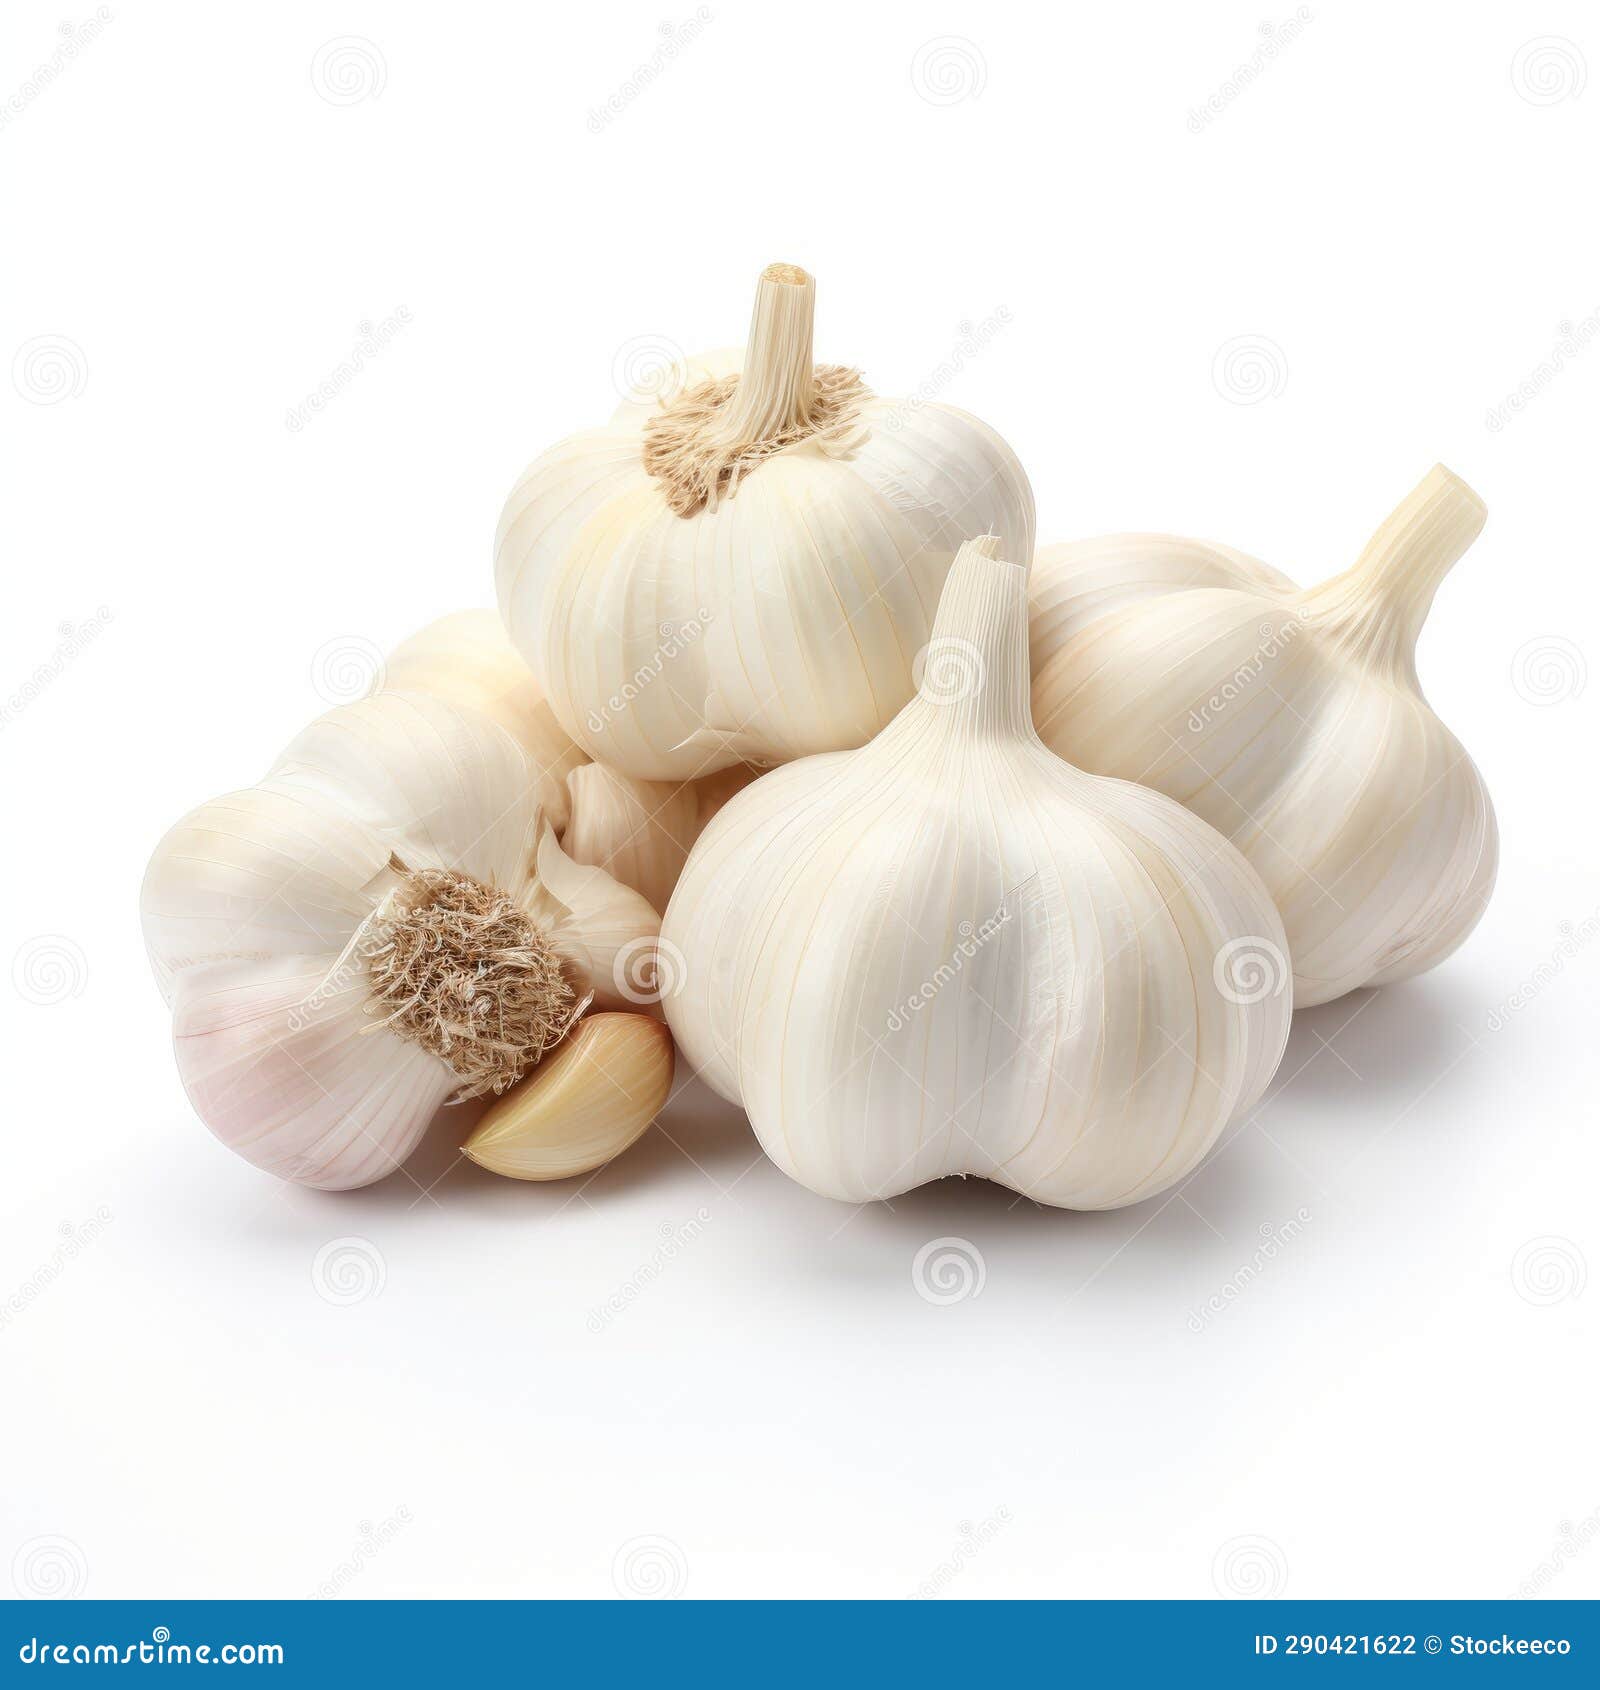 pop-culture-inspired garlic: whiplash curves on white background